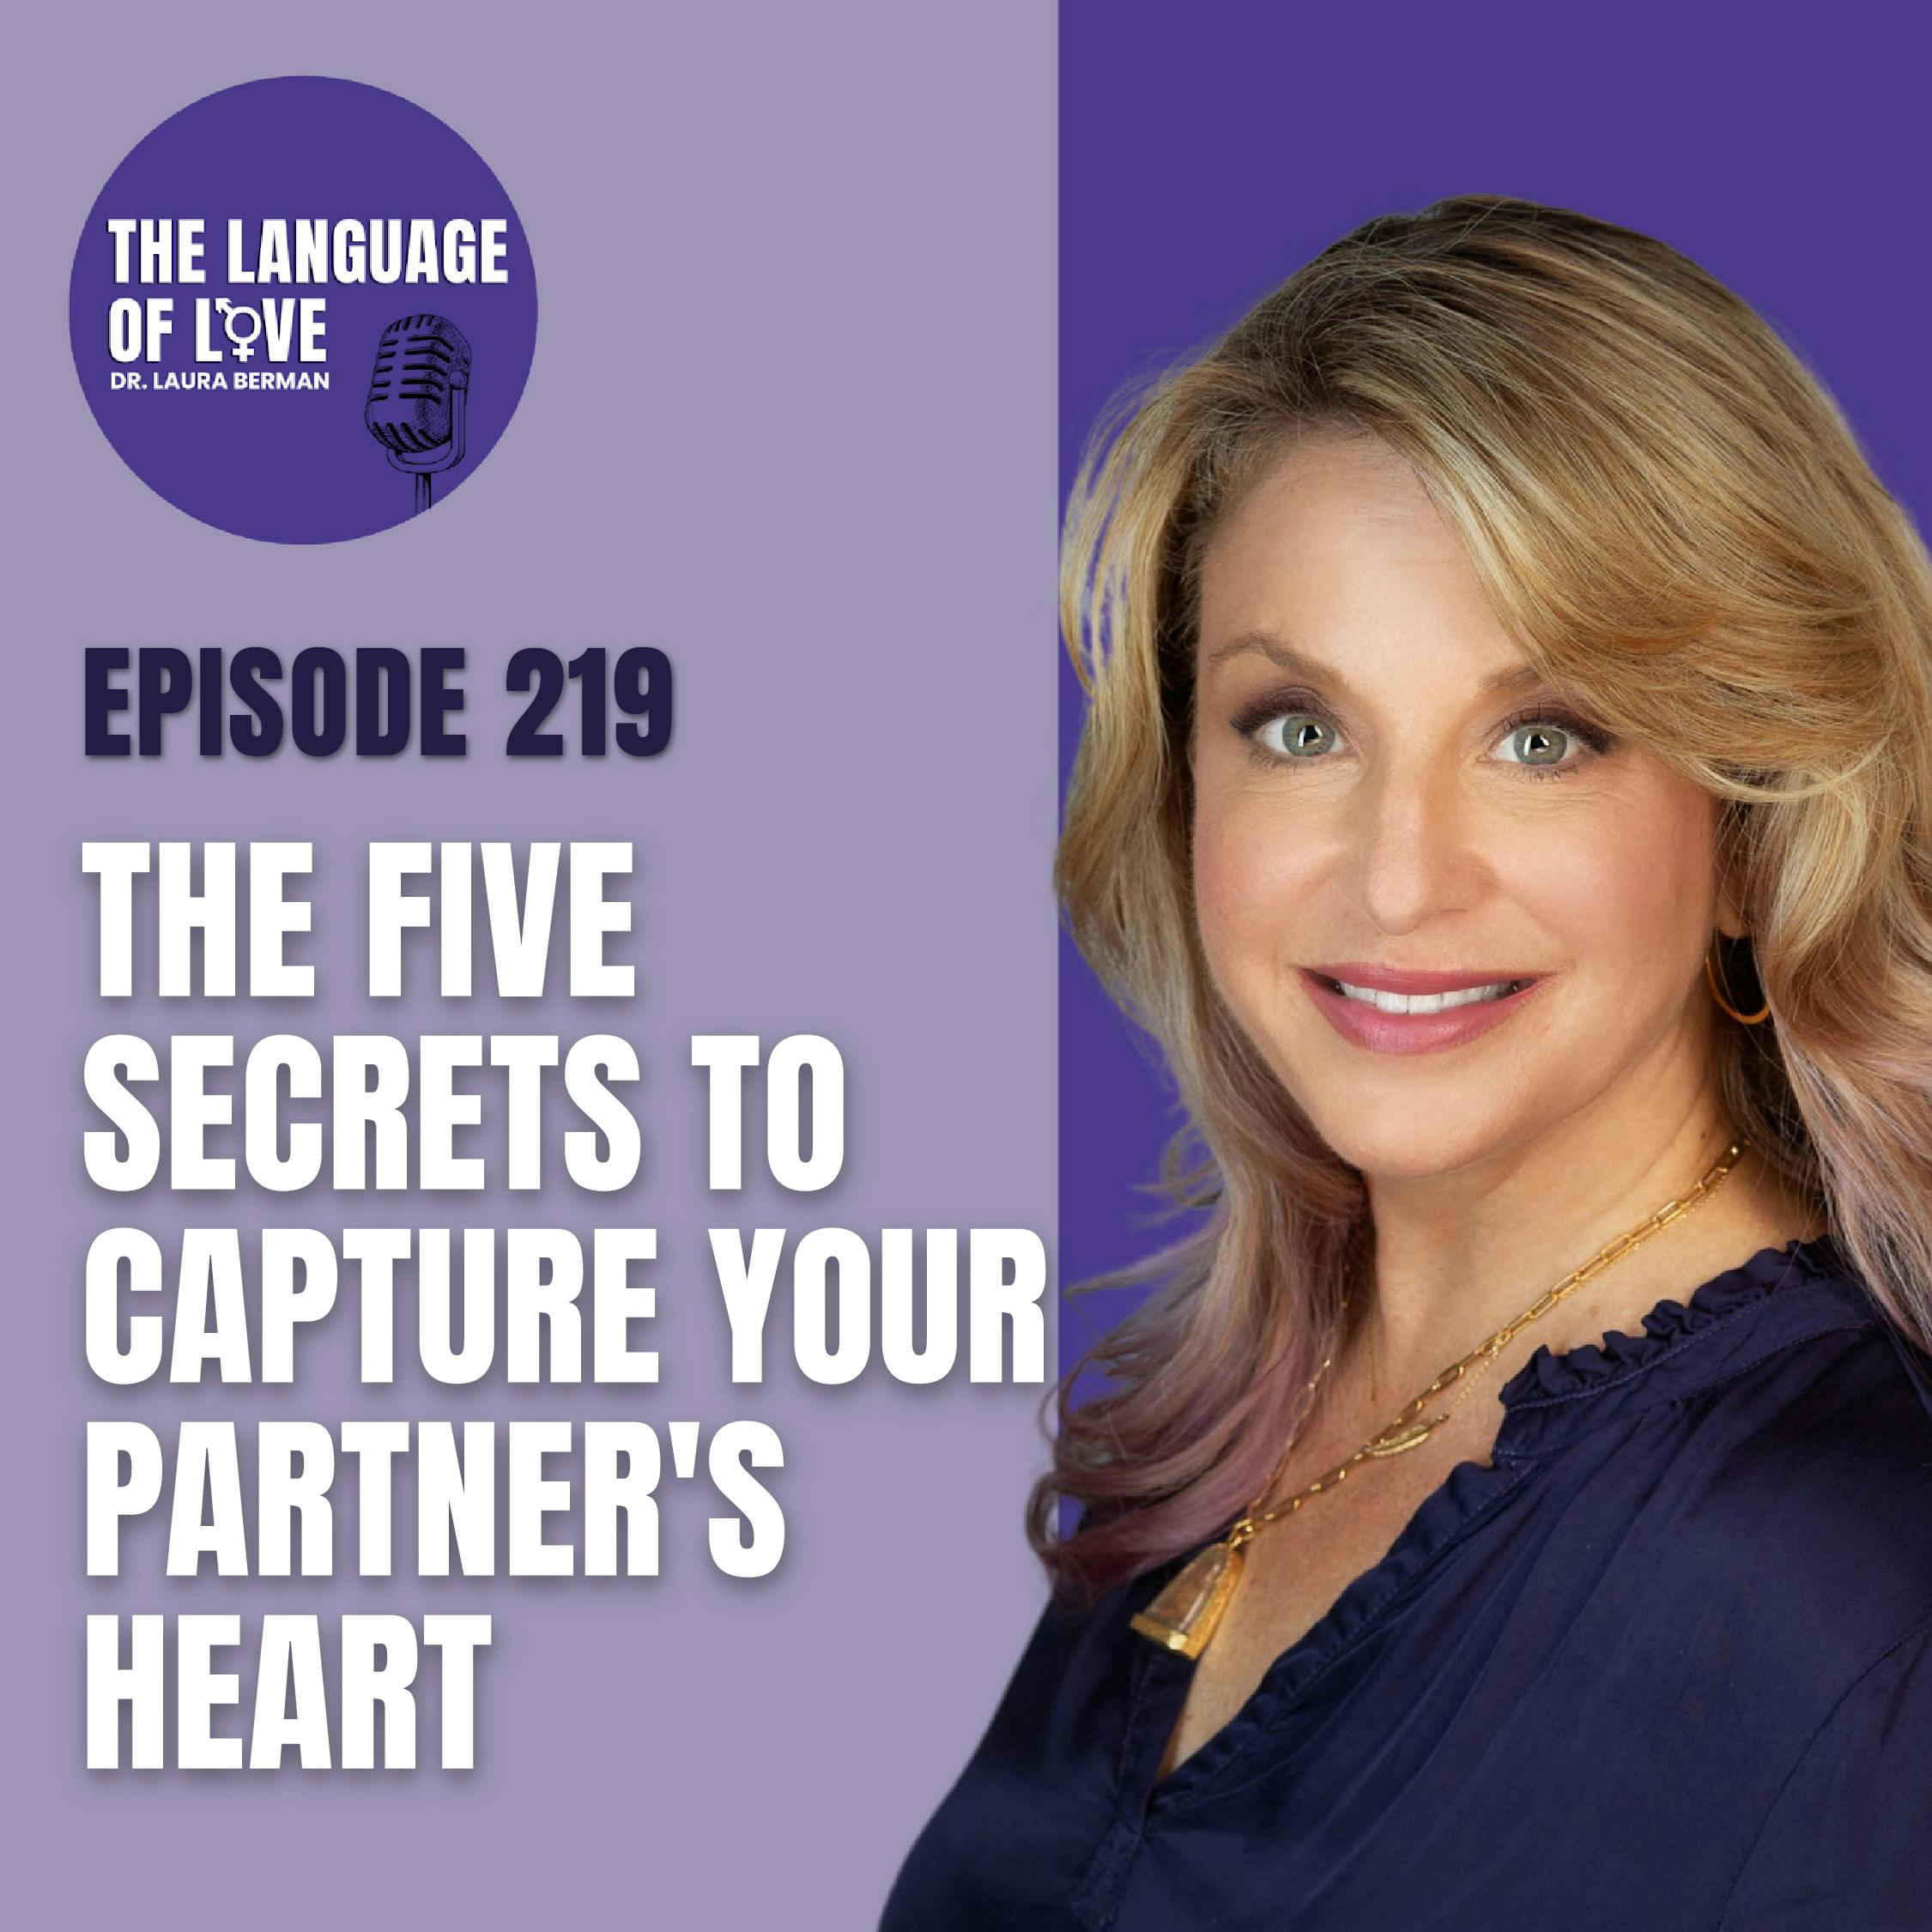 The Five Secrets to Capture Your Partner's Heart